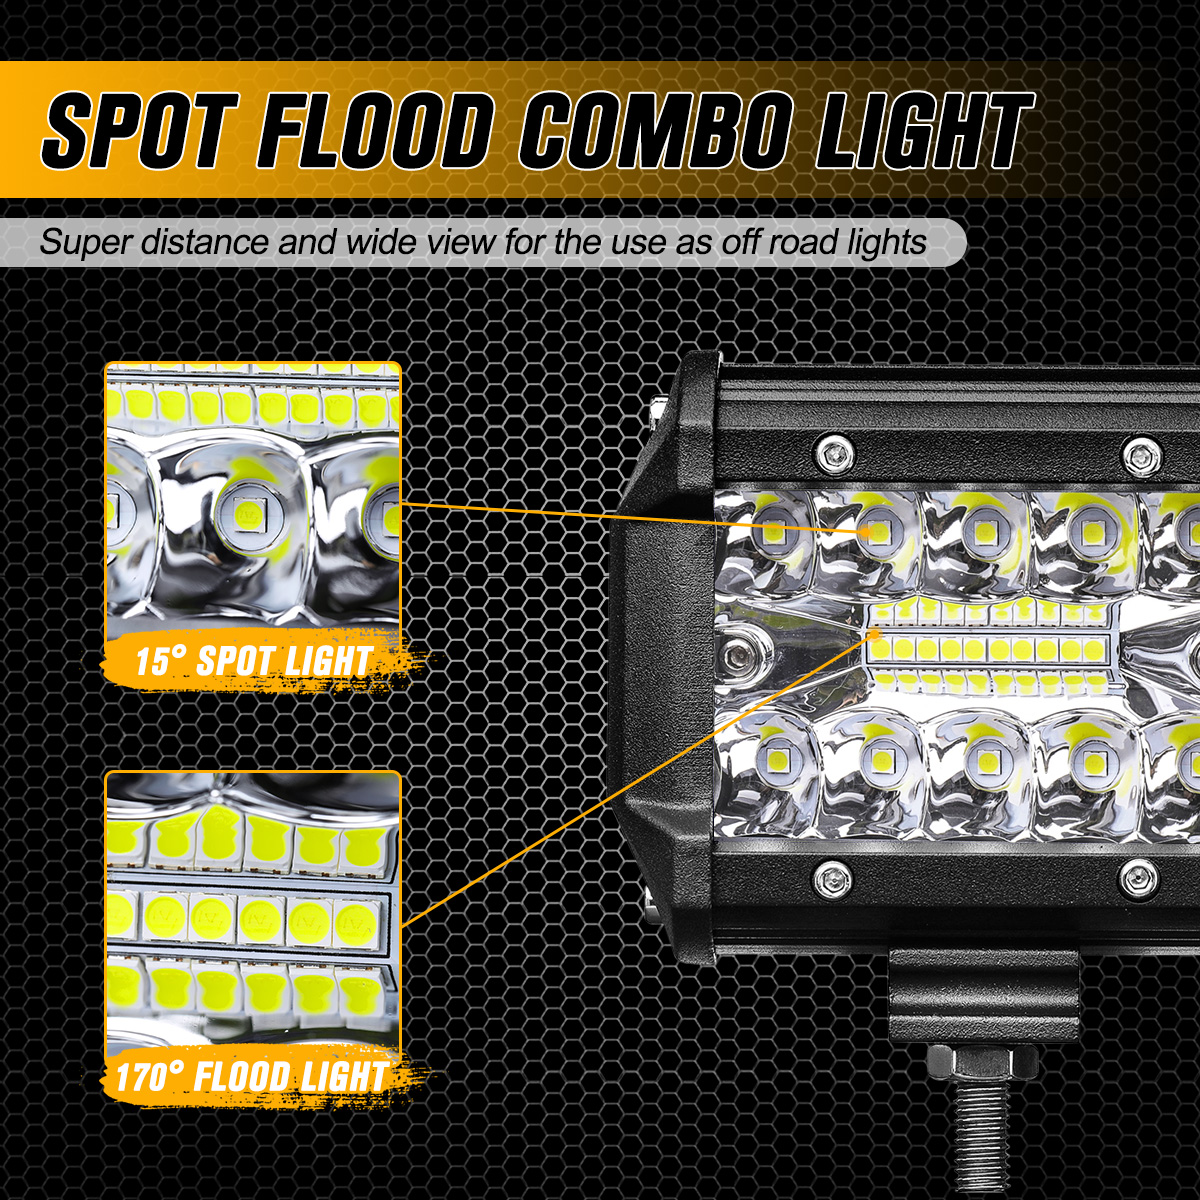 AMBOTHER 2PCS Tri ROW 4 Inch 9-32V 20 LED Work Light Bar Flood Spot Beam Offroad SUV Driving Truck ATV UTV Boat Fog Lamp Waterproof